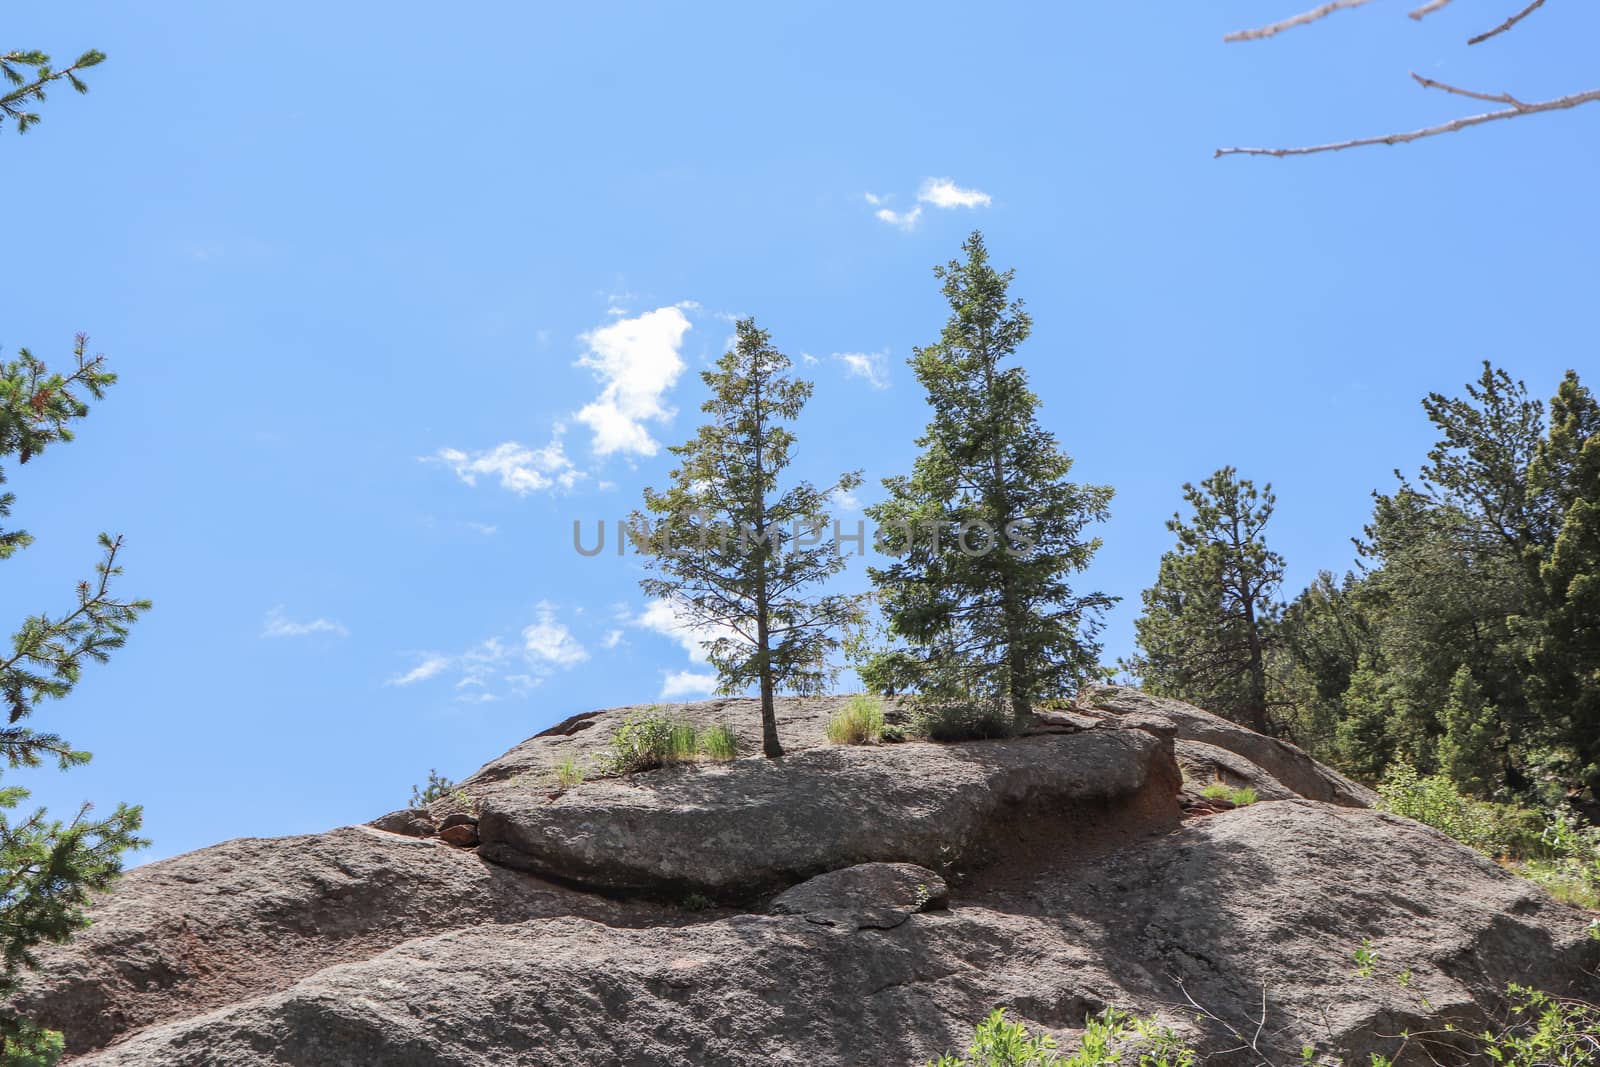 Helen hunt's falls Colorado hiking trail mountain views by gena_wells